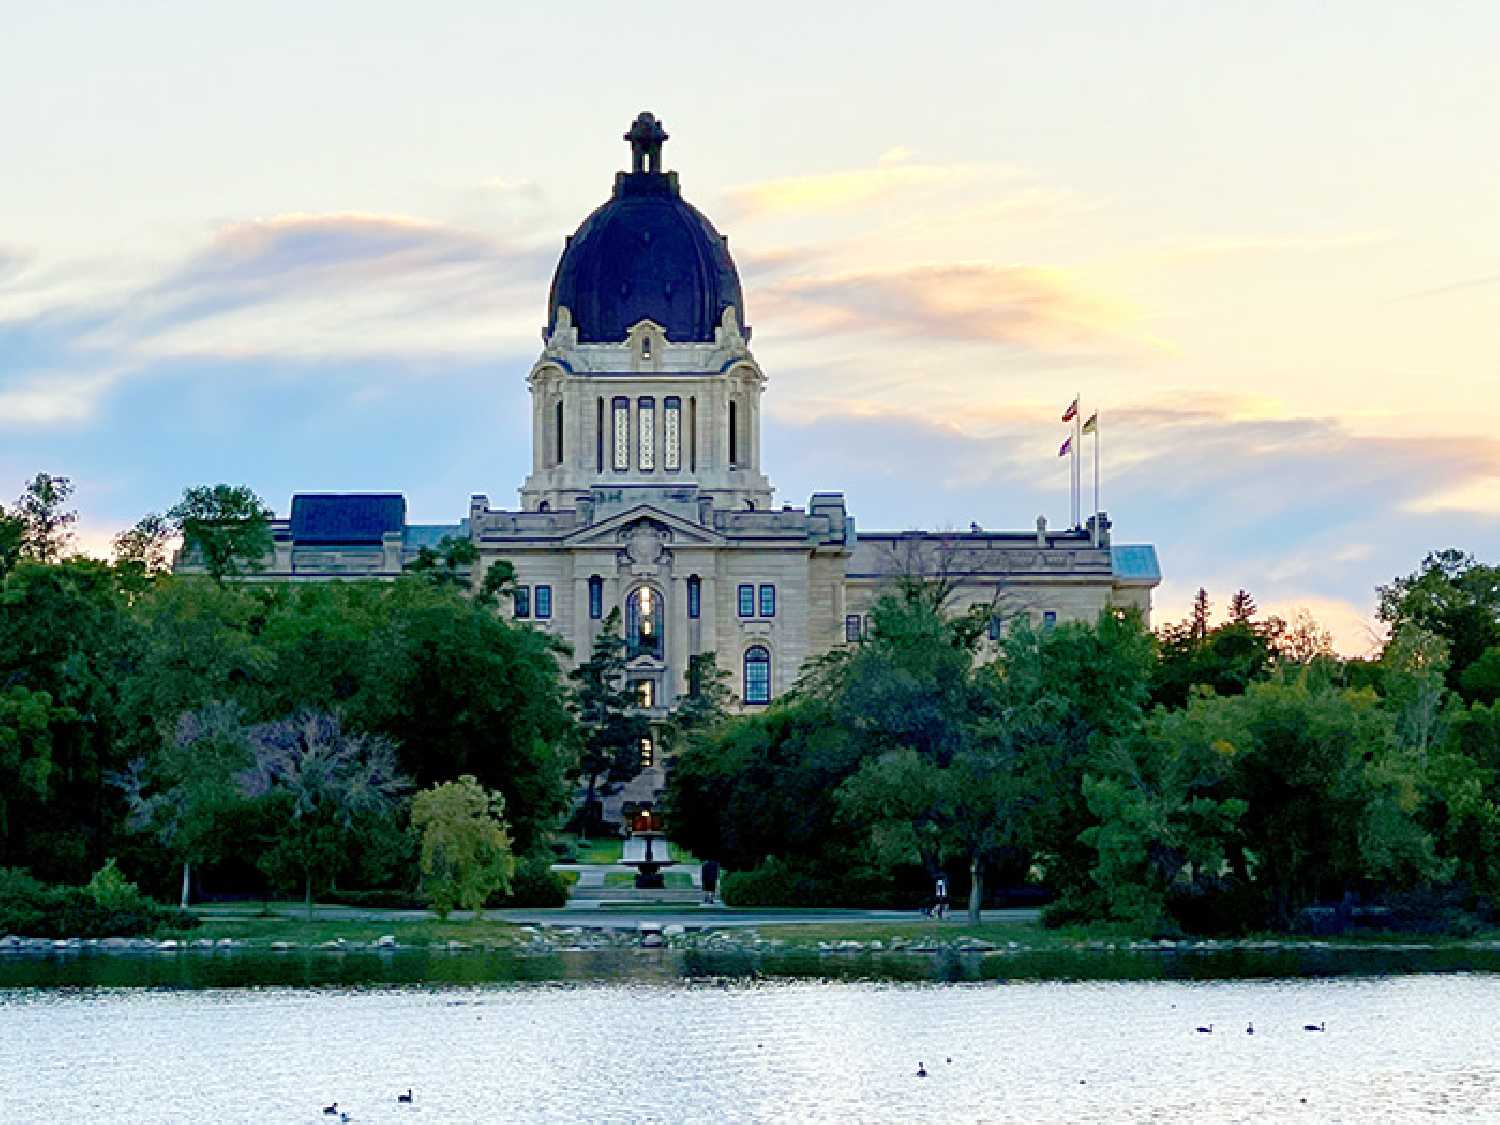 A photo of the Saskatchewan Legislative Building in Regina taken by Kevin Weedmark.